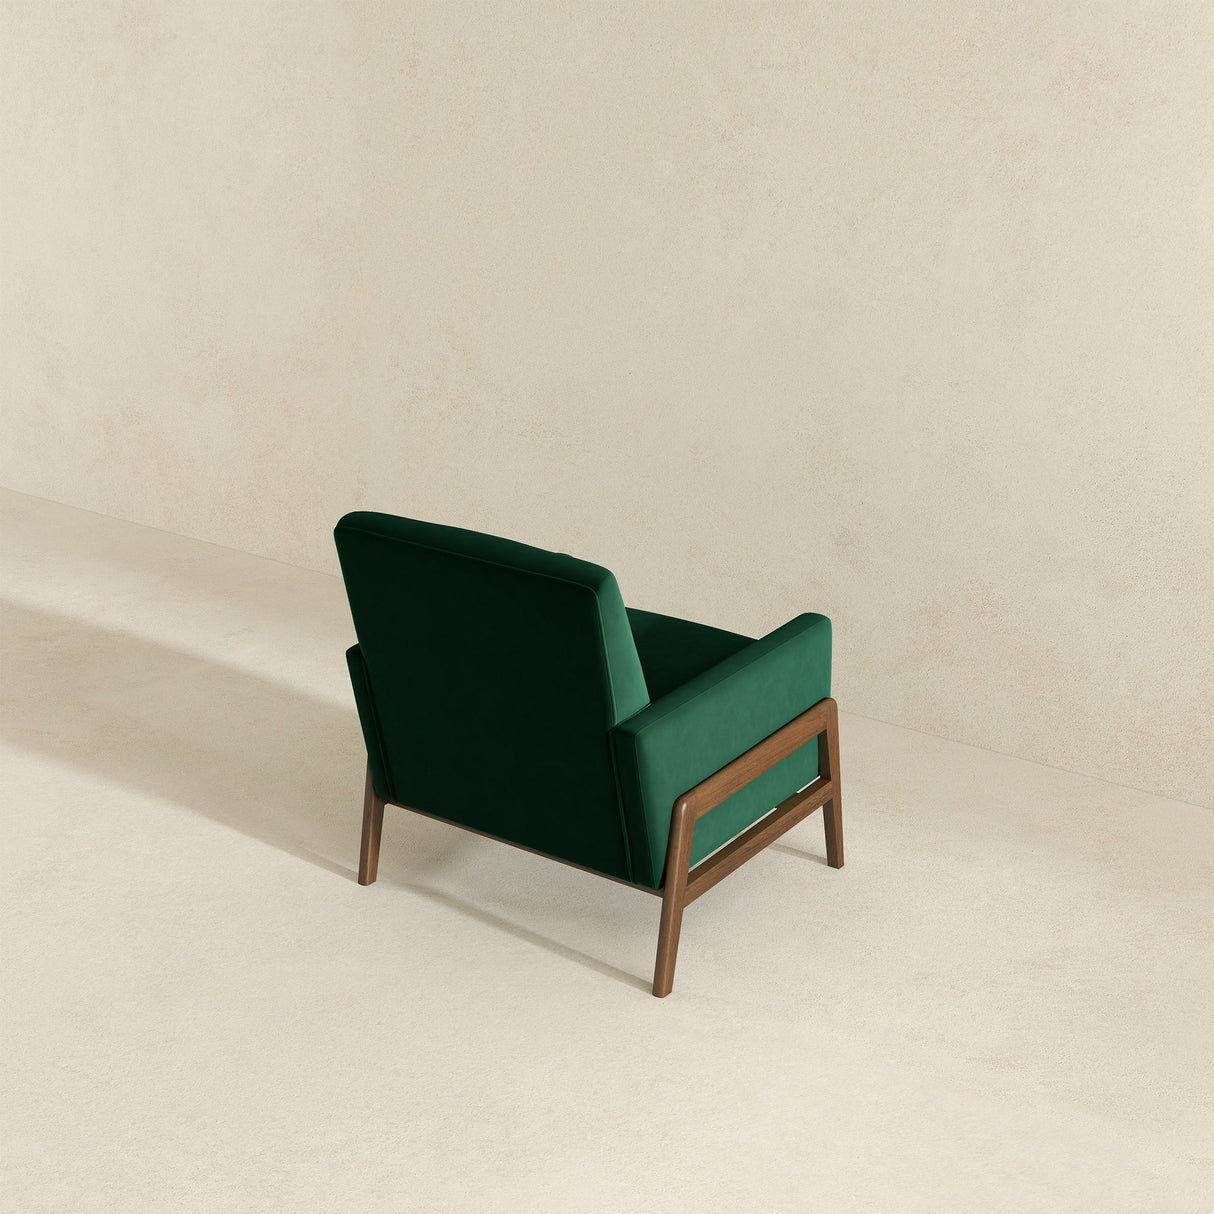 Cole Mid-Century Modern Solid Wood  Green Velvet Lounge Chair - AFC00046 - Luna Furniture